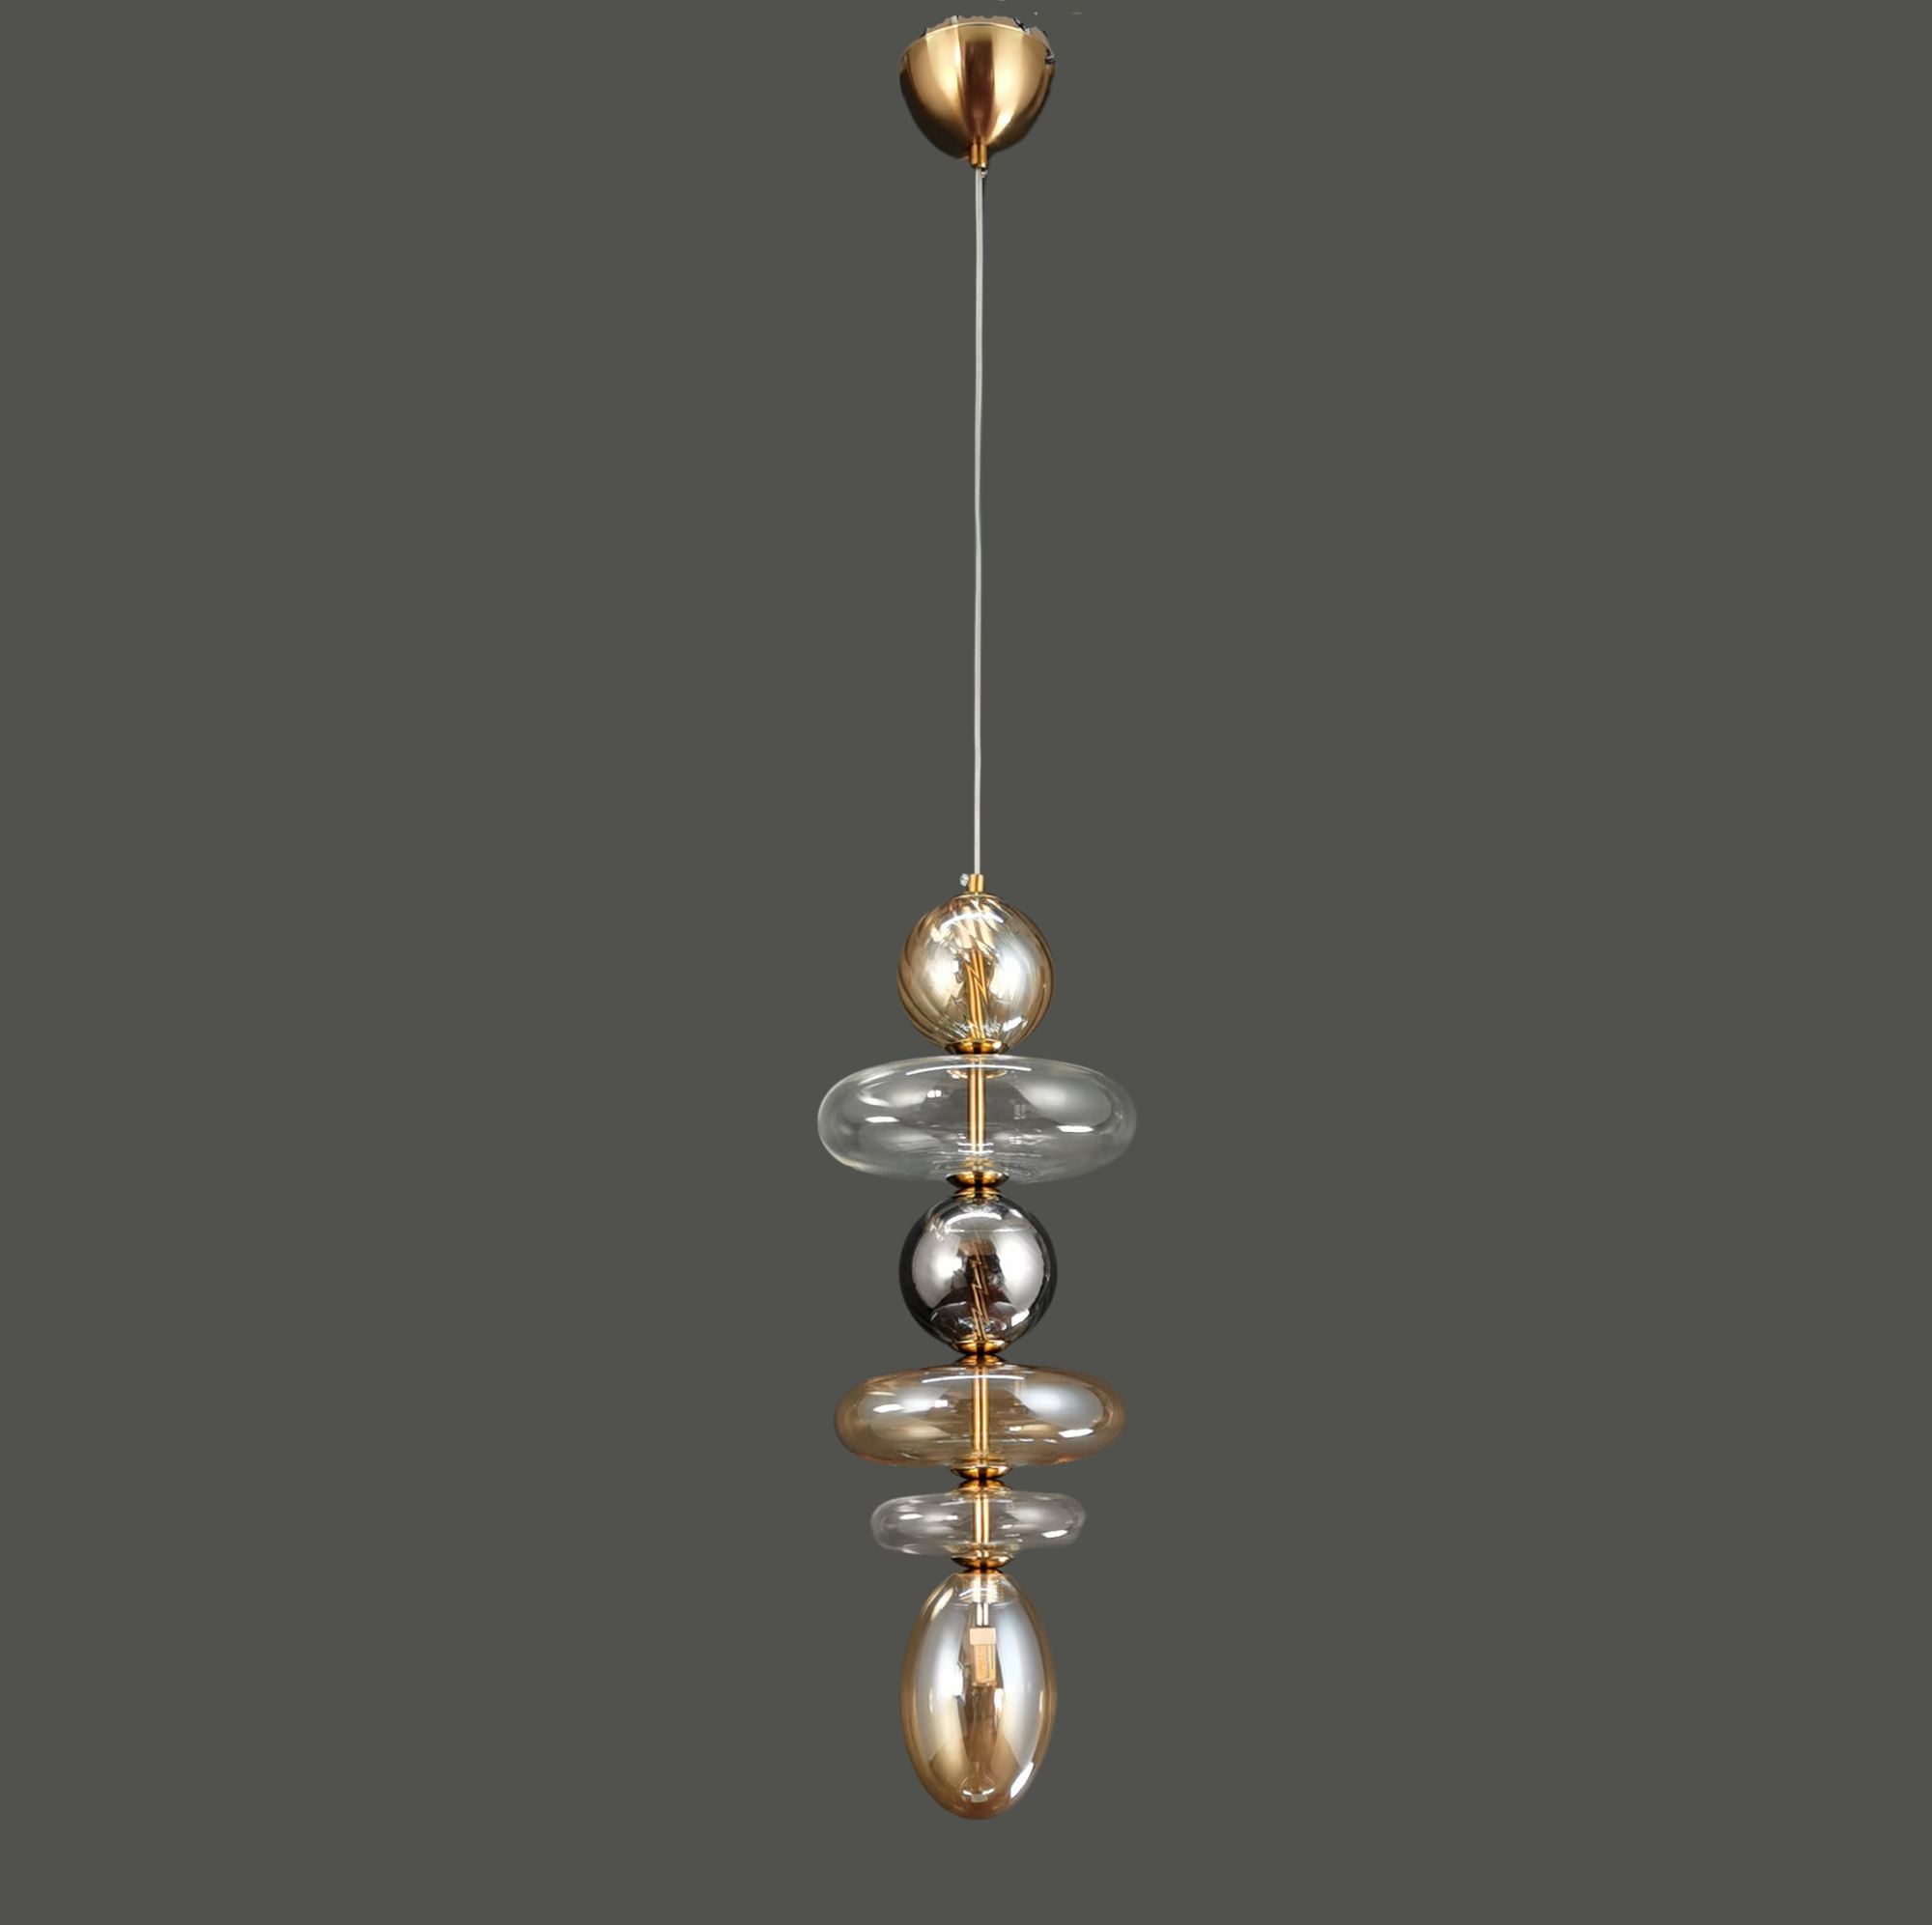 A1928/A3 Modern Metal Glass bubble lamp Pendant Light